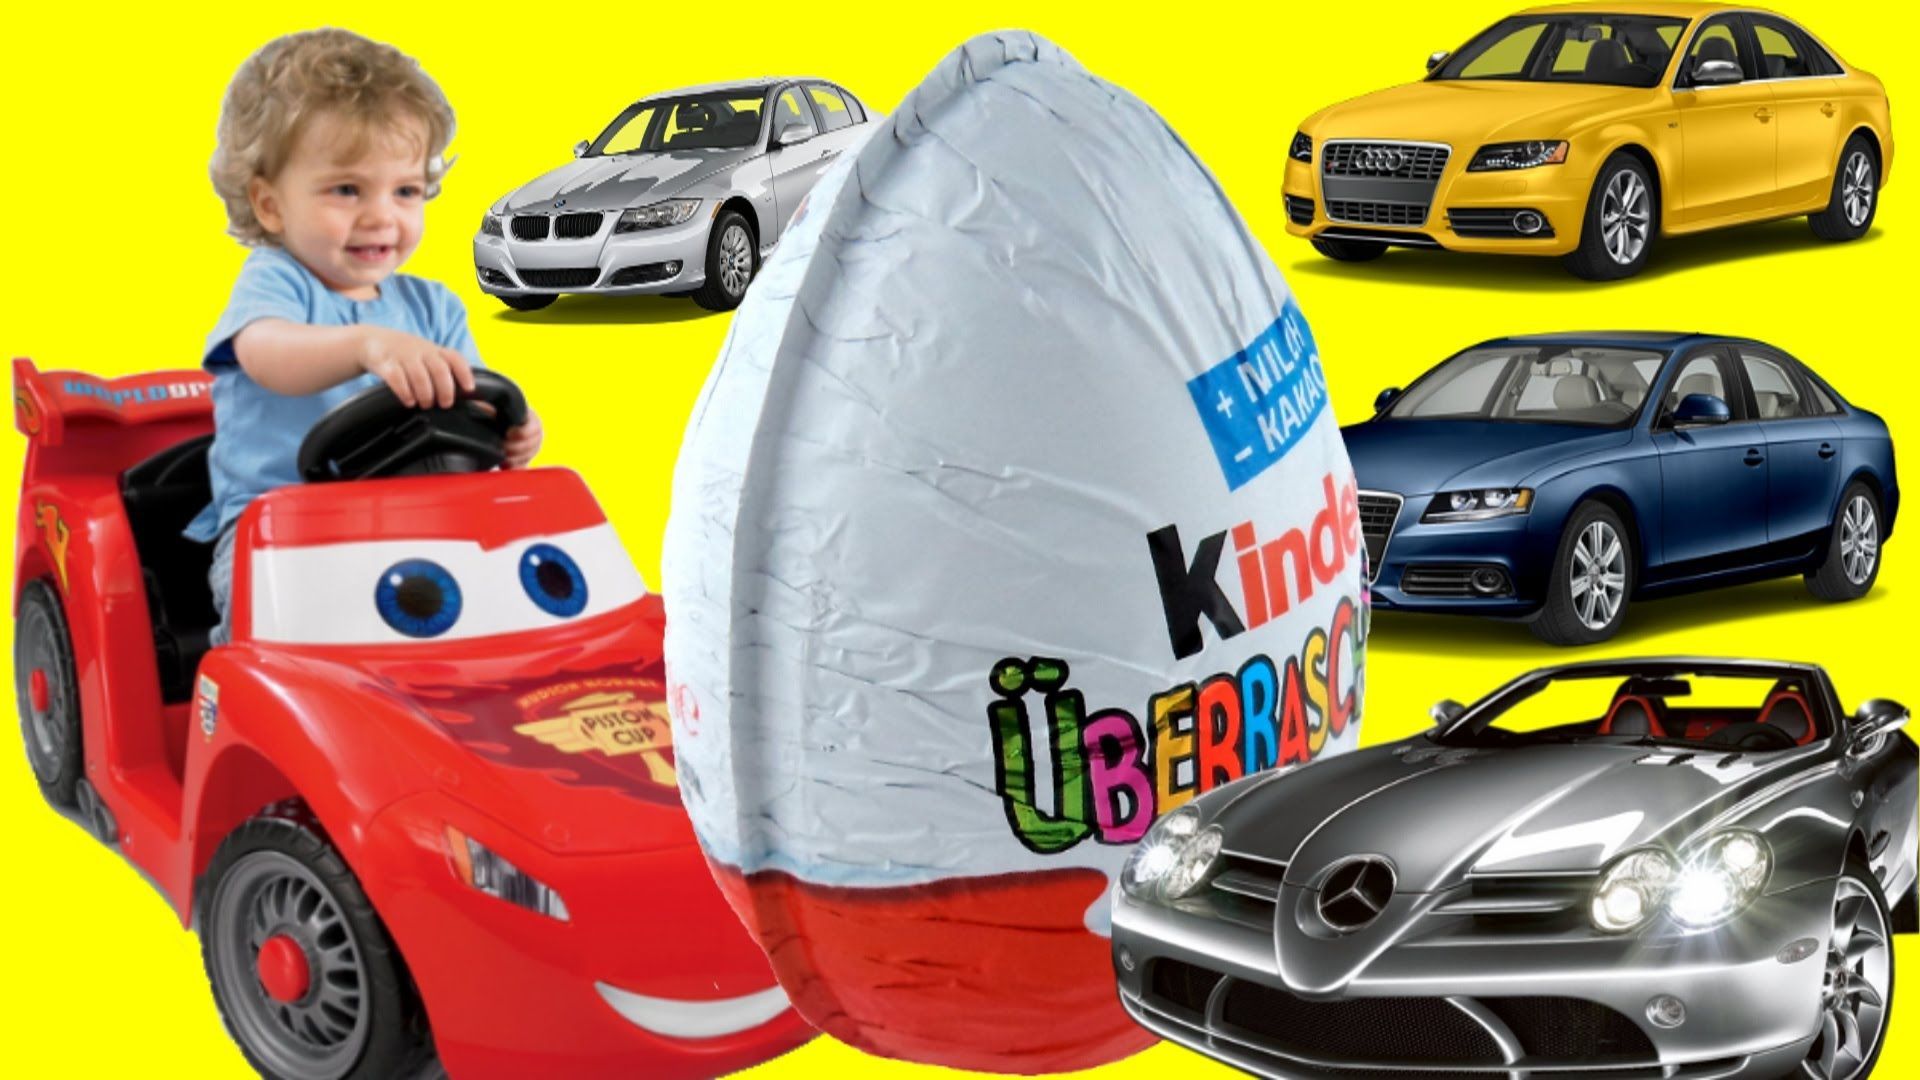 Disney Cars Toys Kinder Surprise Eggs Mini modelle Drive Lightning McQue…